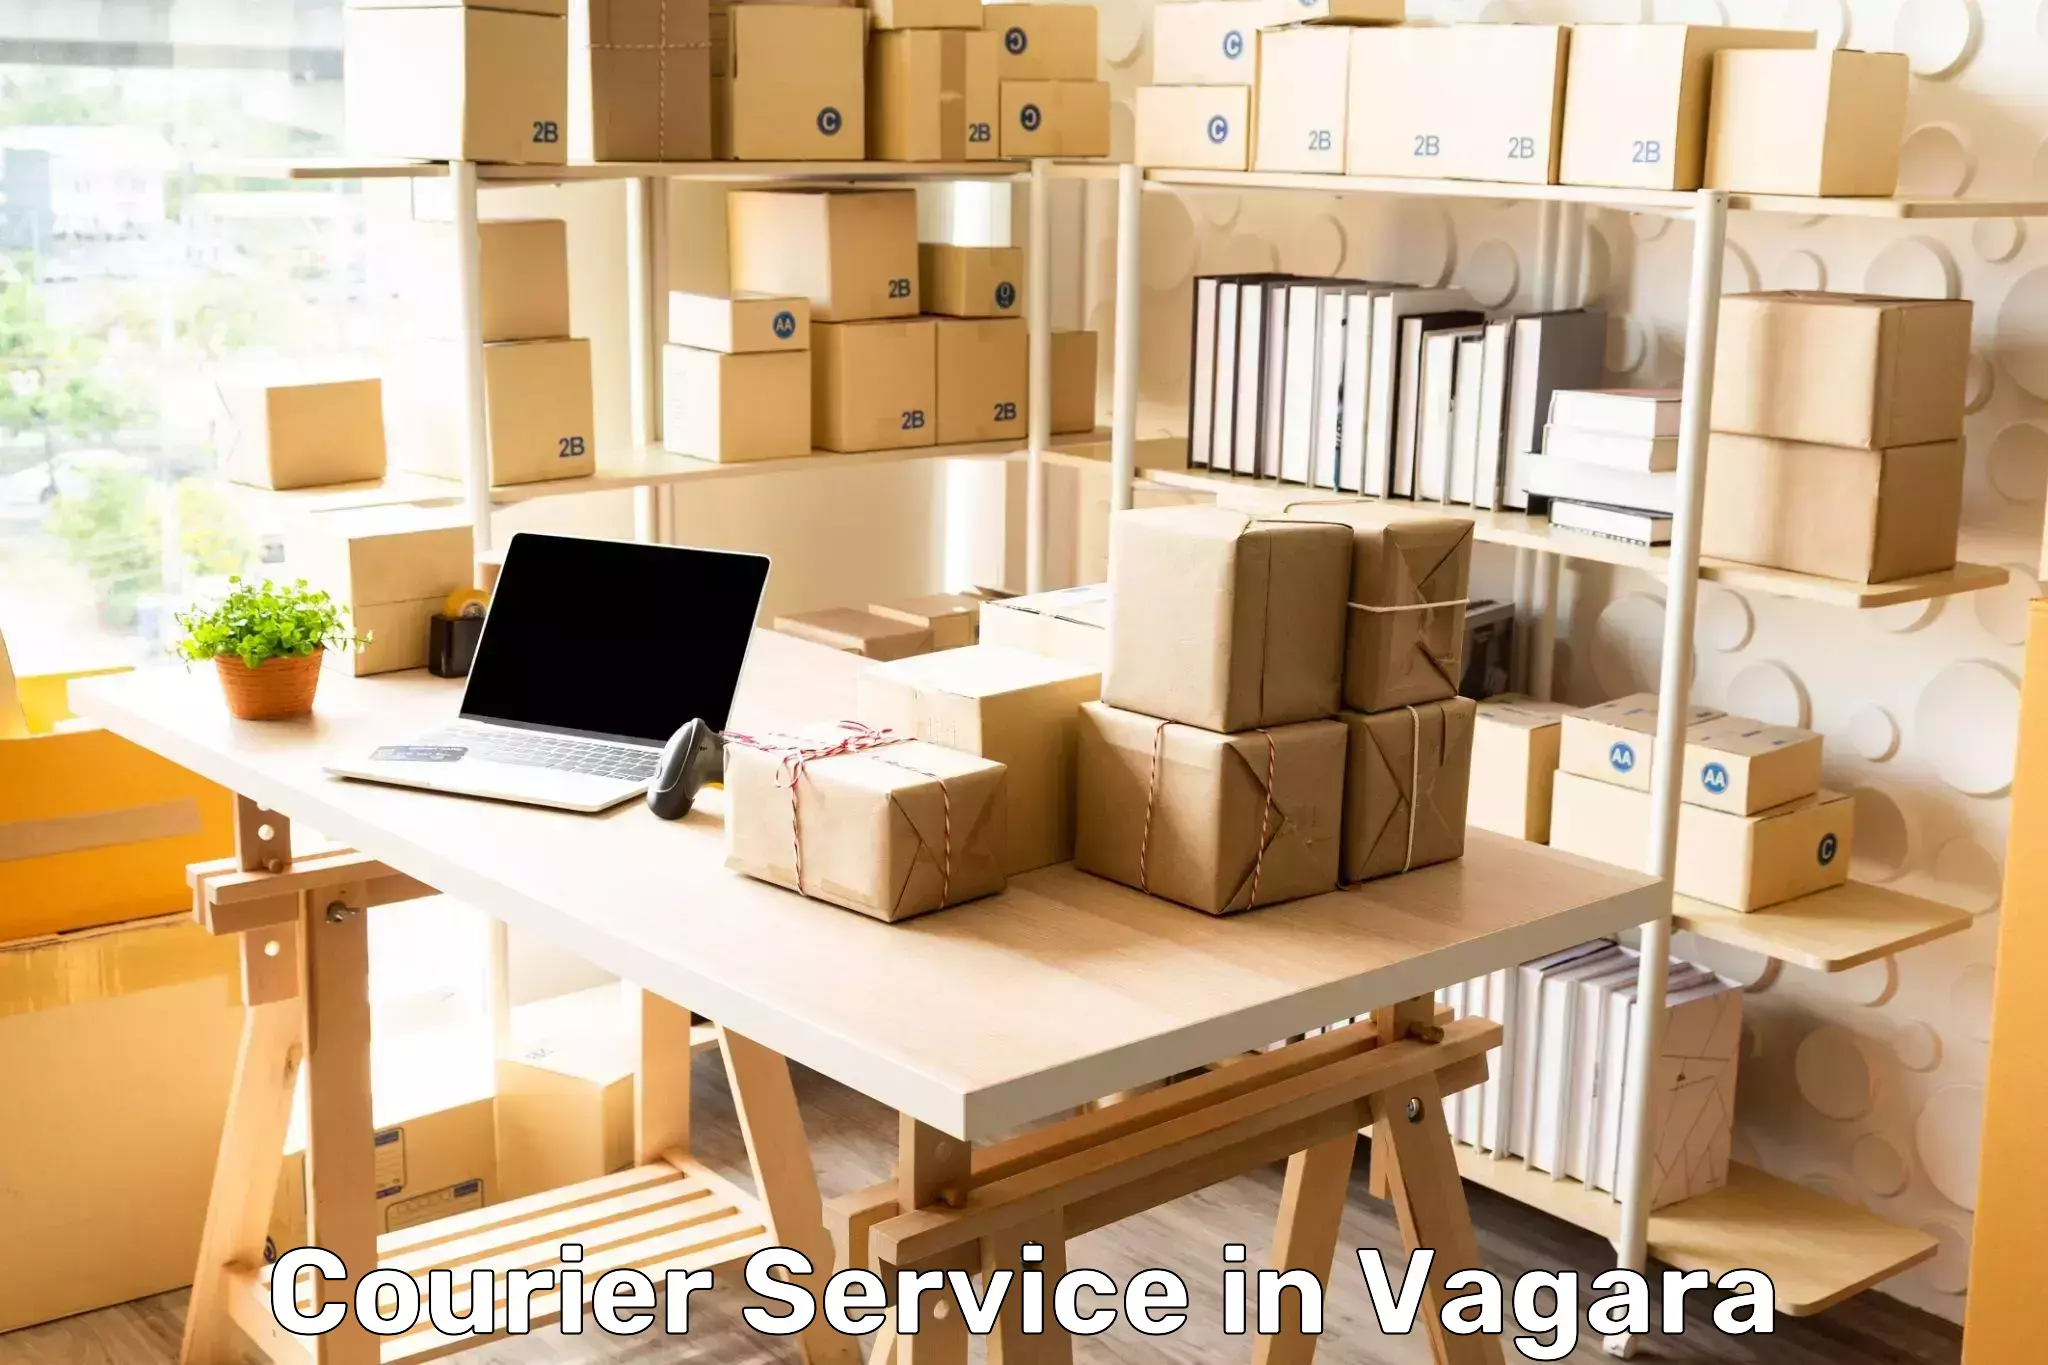 24-hour courier service in Vagara